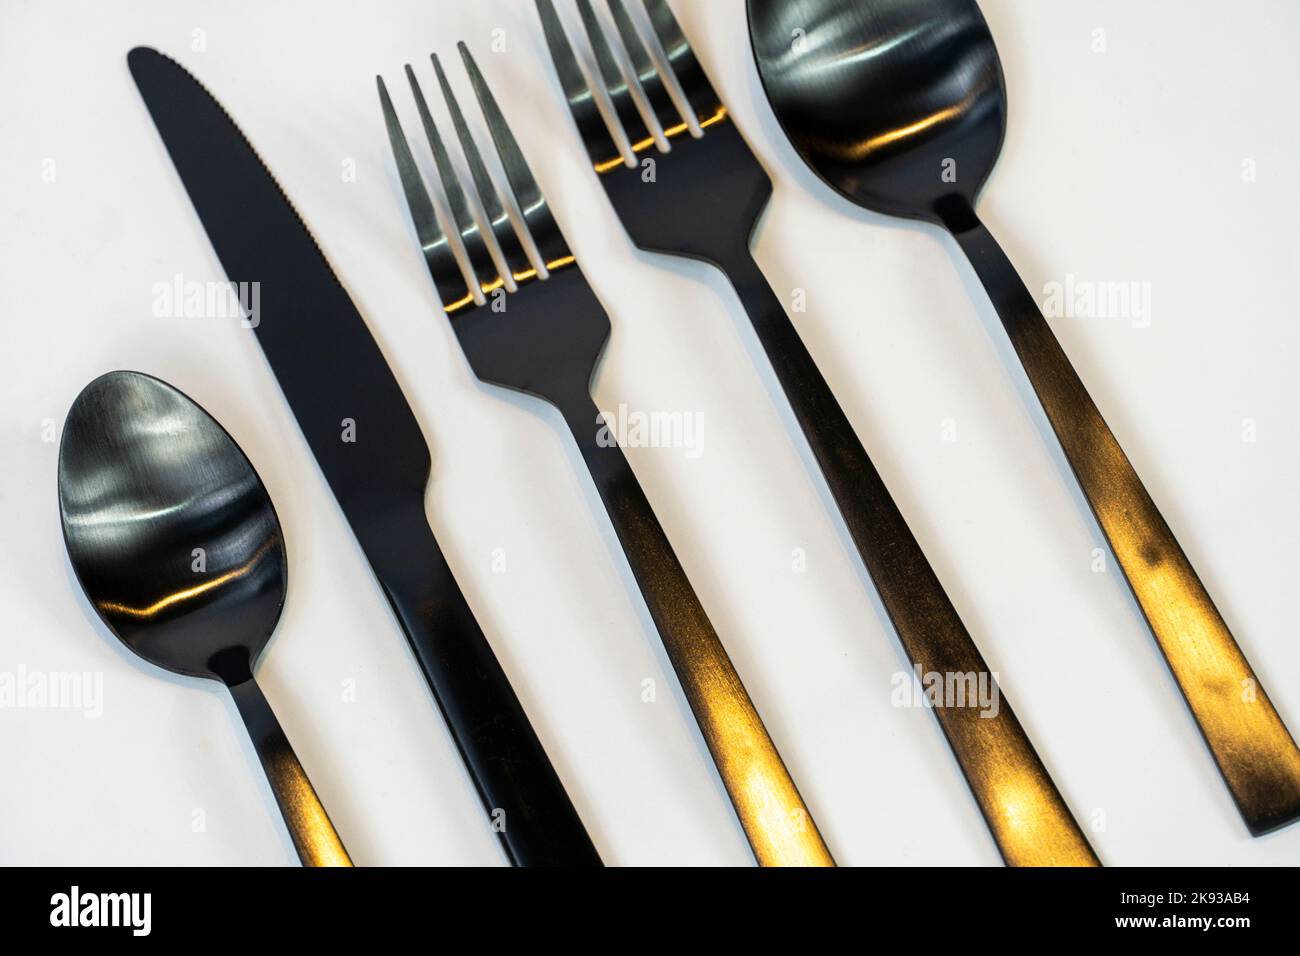 Set of black modern kitchen utensil hanging Stock Photo by ©dasha11 75298281